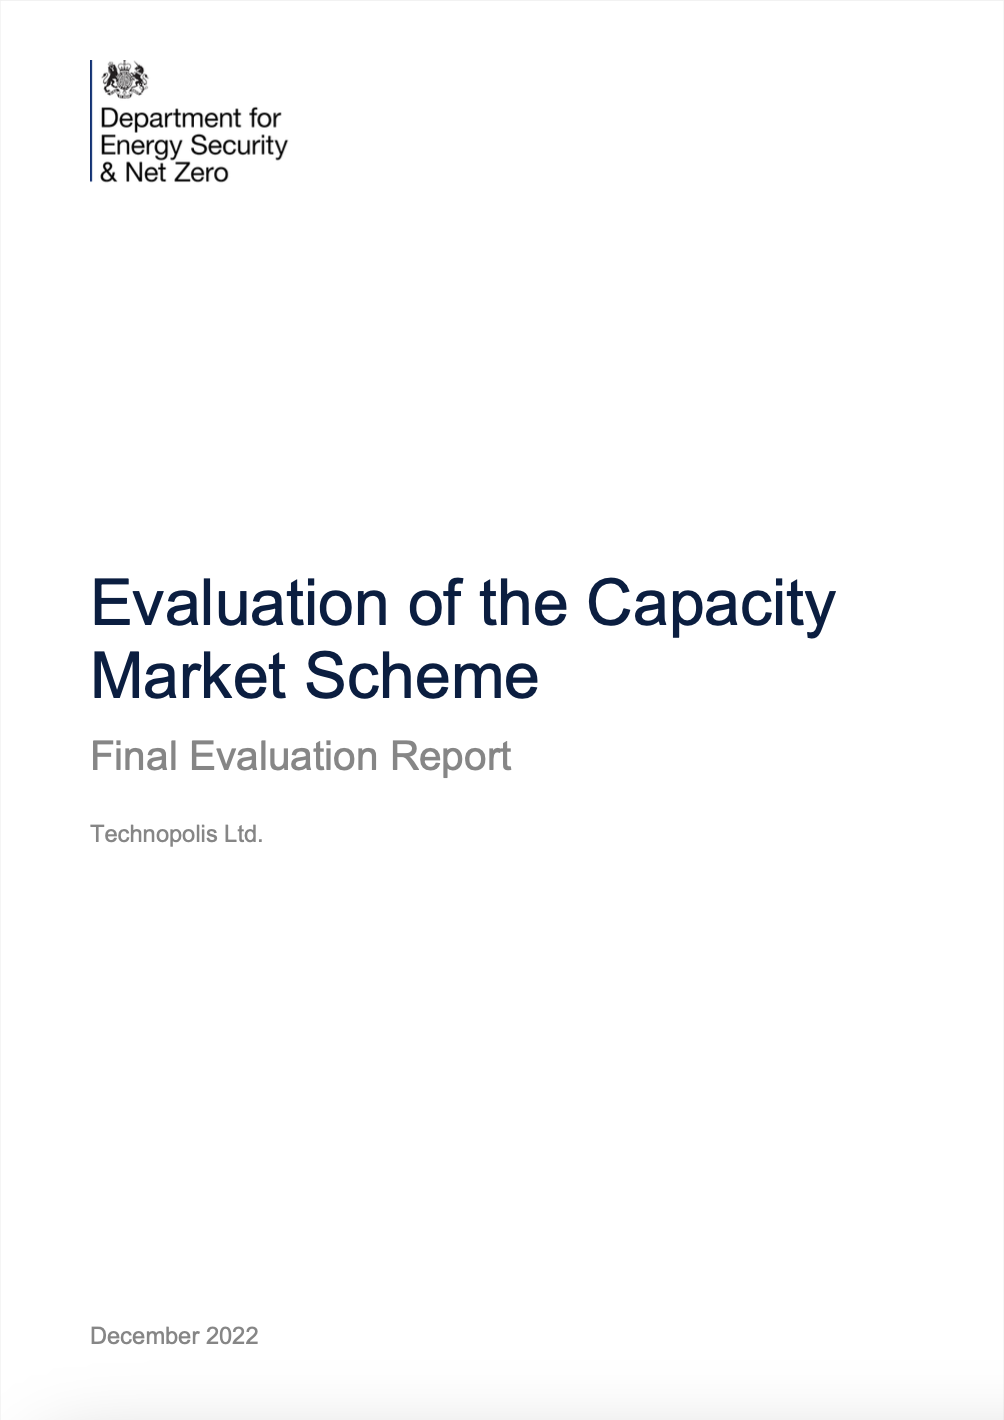 Evaluation of the Capacity Market scheme